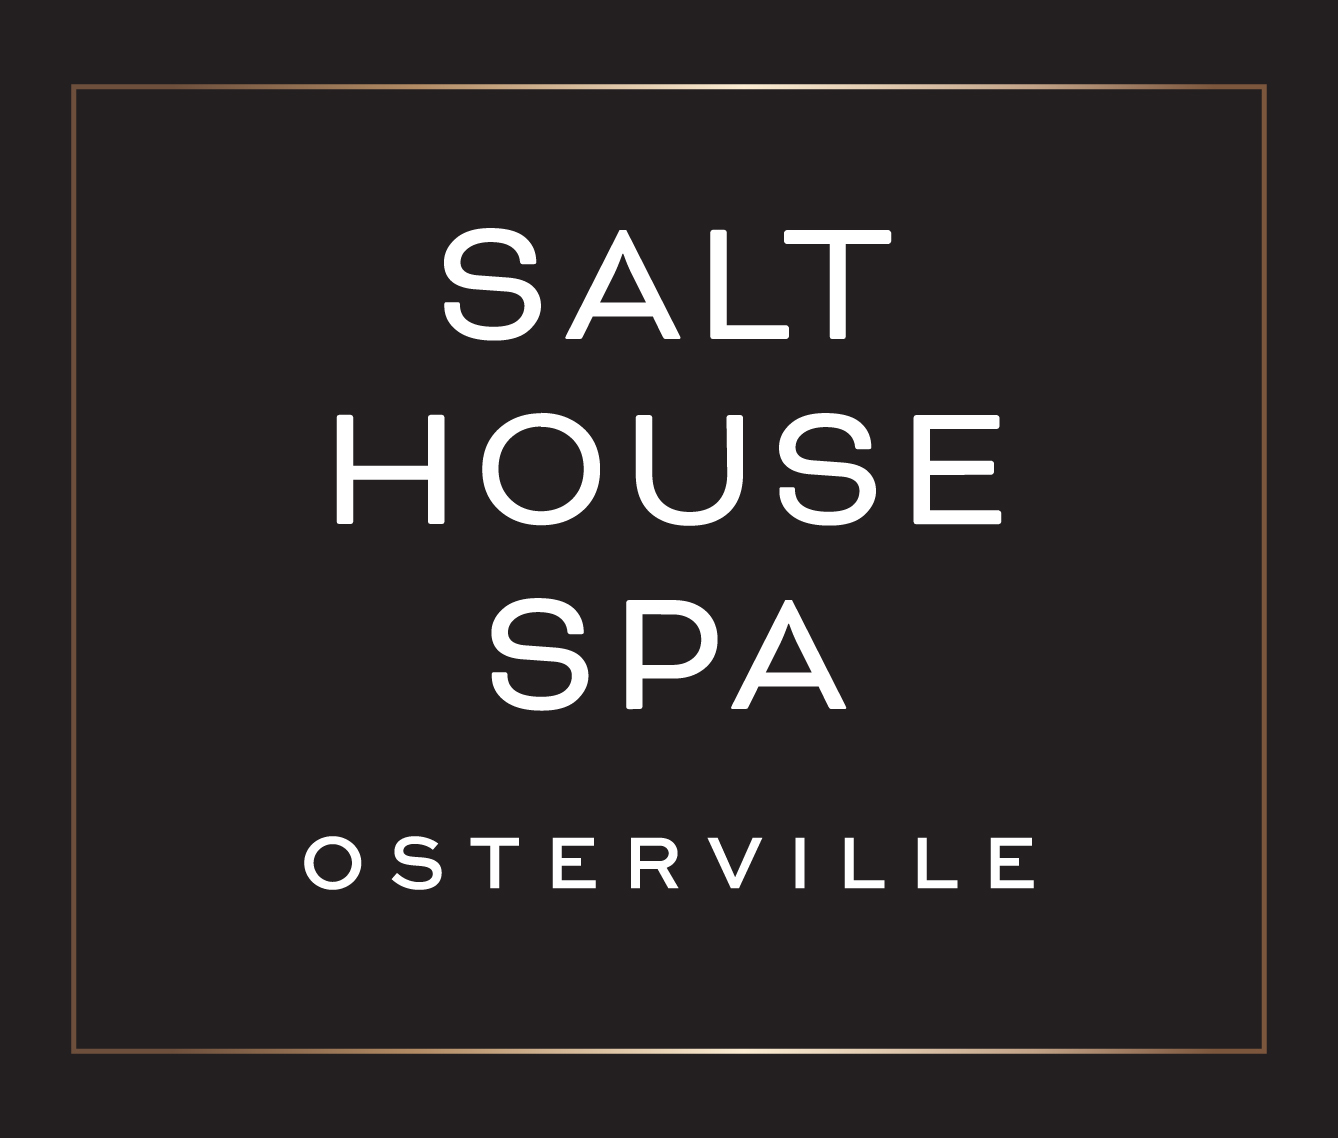 Salt House Spa 1336 Main St, Osterville Massachusetts 02655